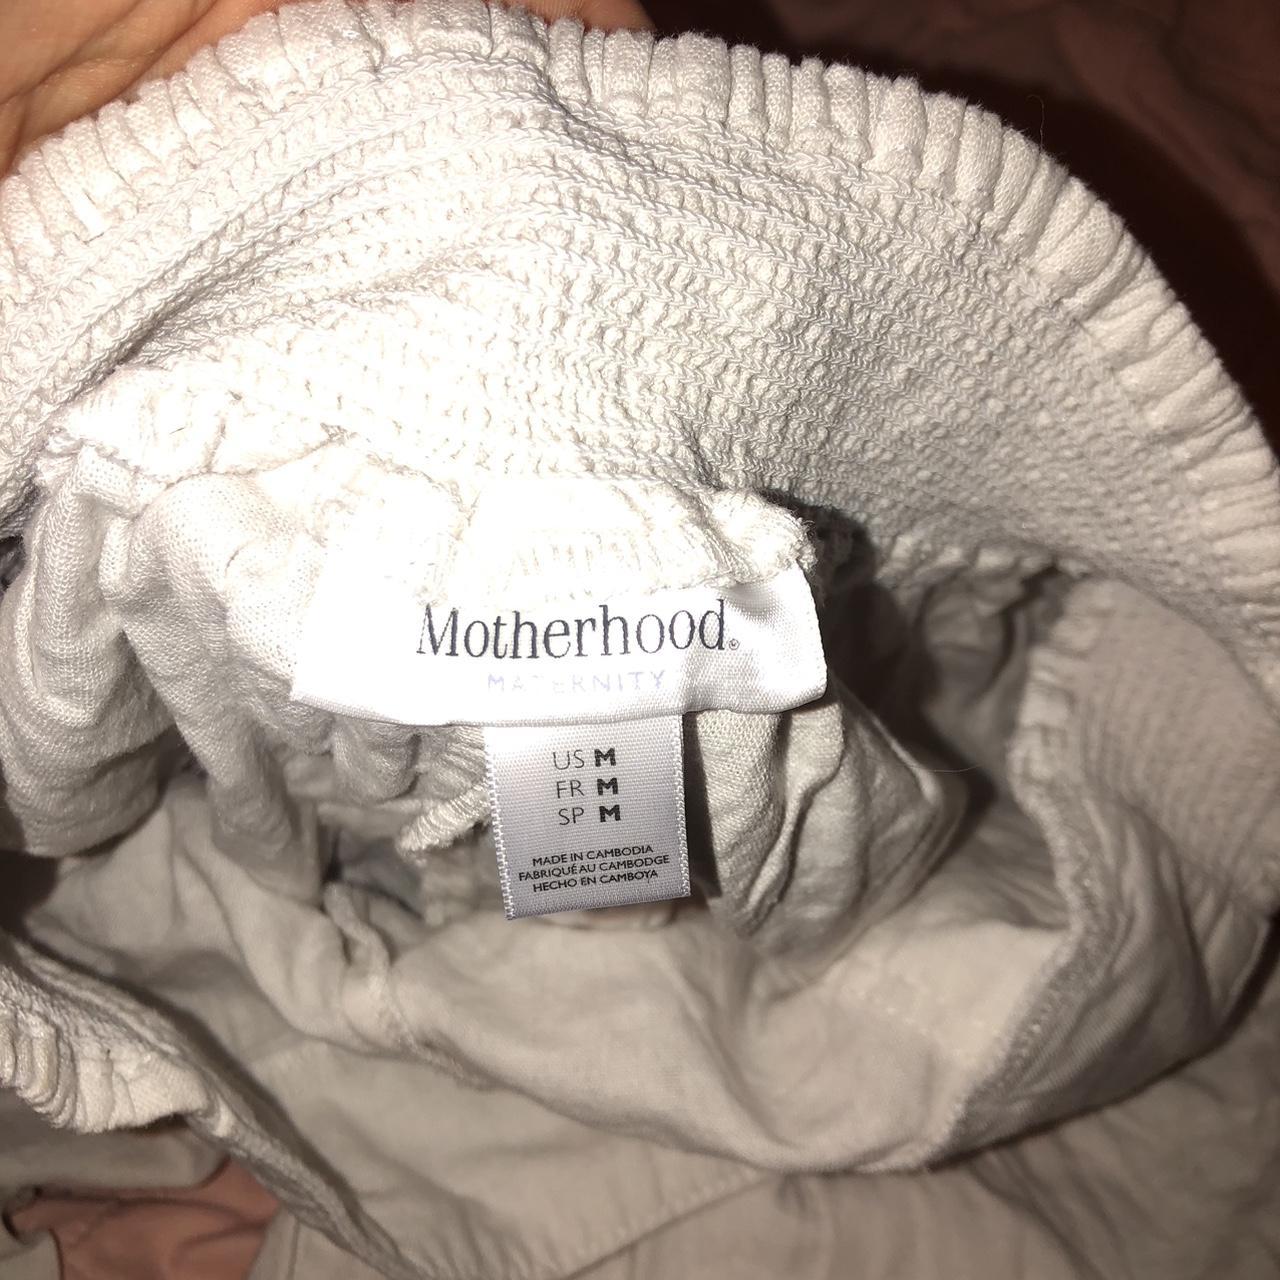 Motherhood maternity pants Mid/low rise wide leg - Depop